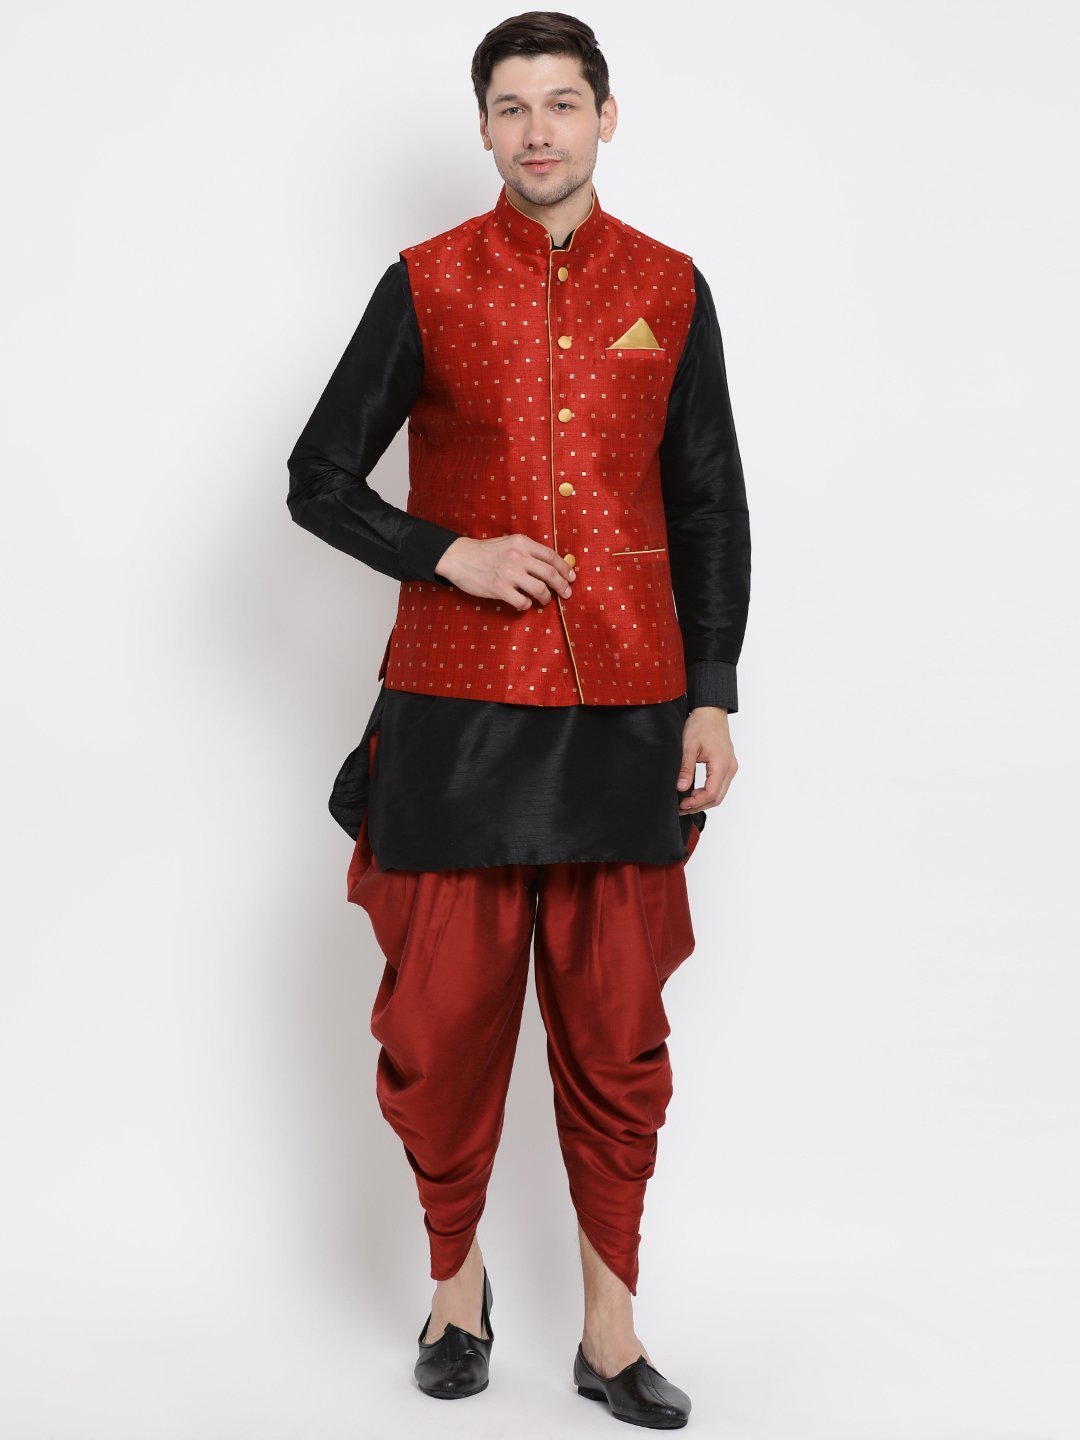 Men's Black Cotton Silk Blend Ethnic Jacket, Kurta and Dhoti Pant Set